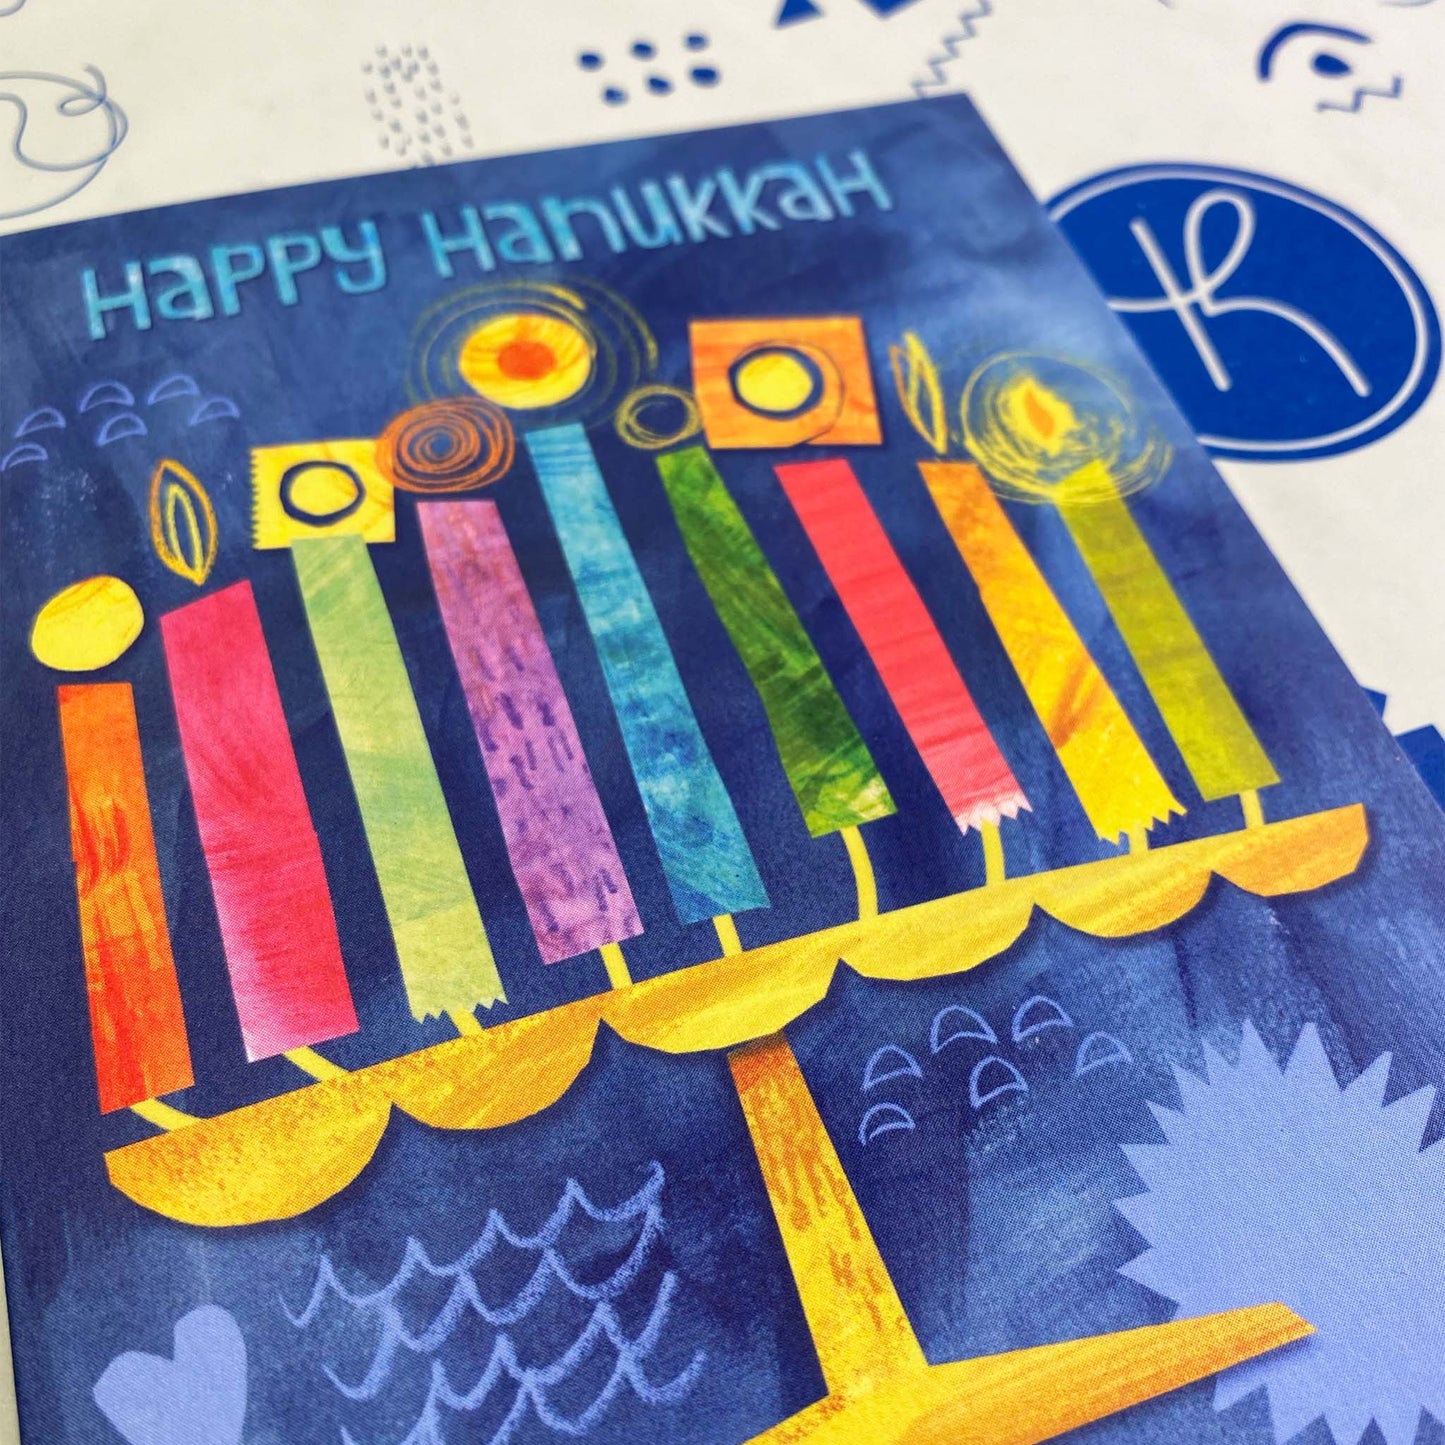 Happy Hanukkah Menorah Greeting Card-Wholesale